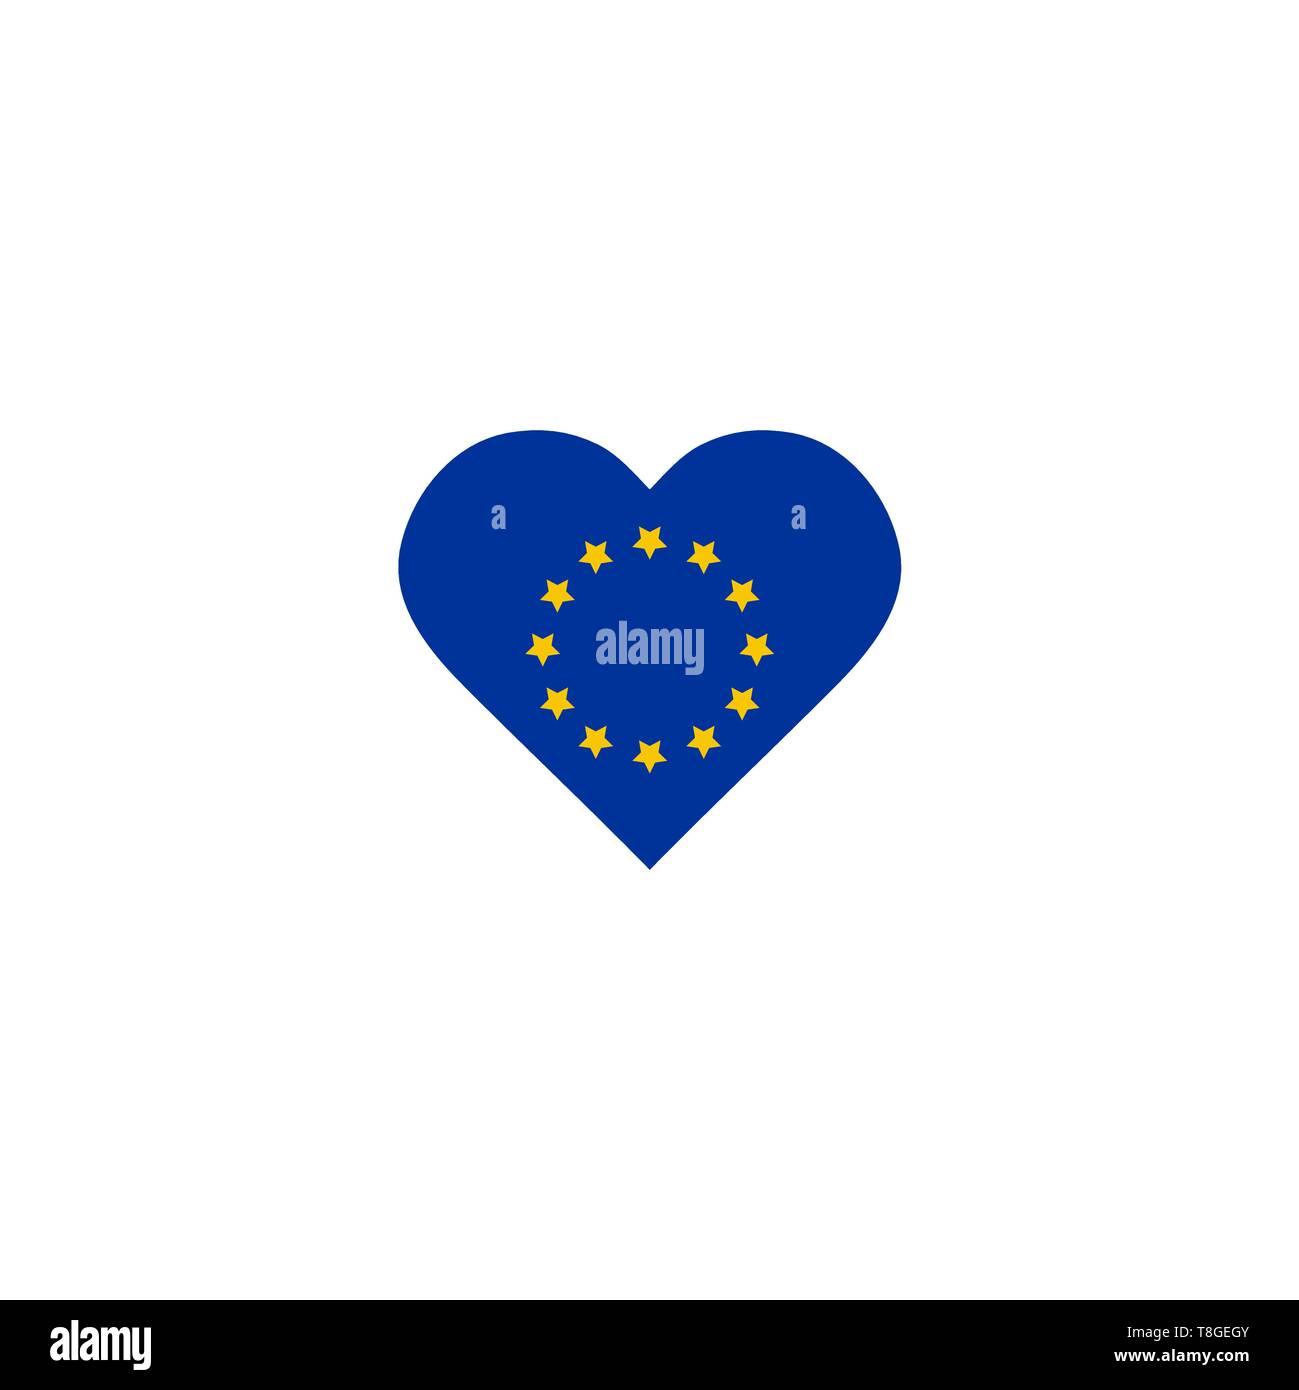 European Union Vector Flag Inside heart shape graphic element Illustration template design Stock Vector